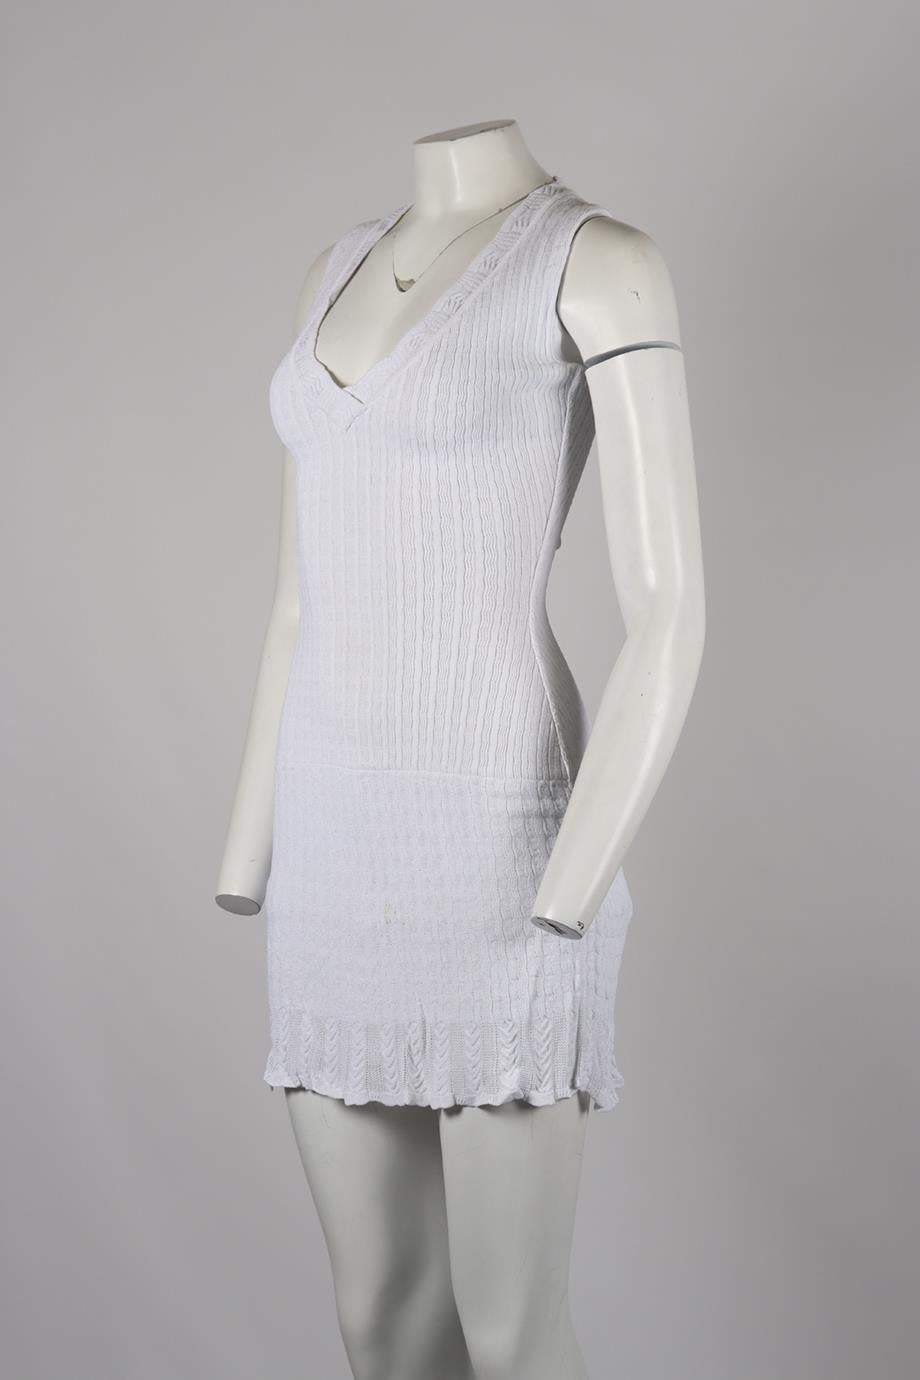 Azzedine Alaïa Vintage Stretch Knit Mini Dress Xsmall In Good Condition In London, GB